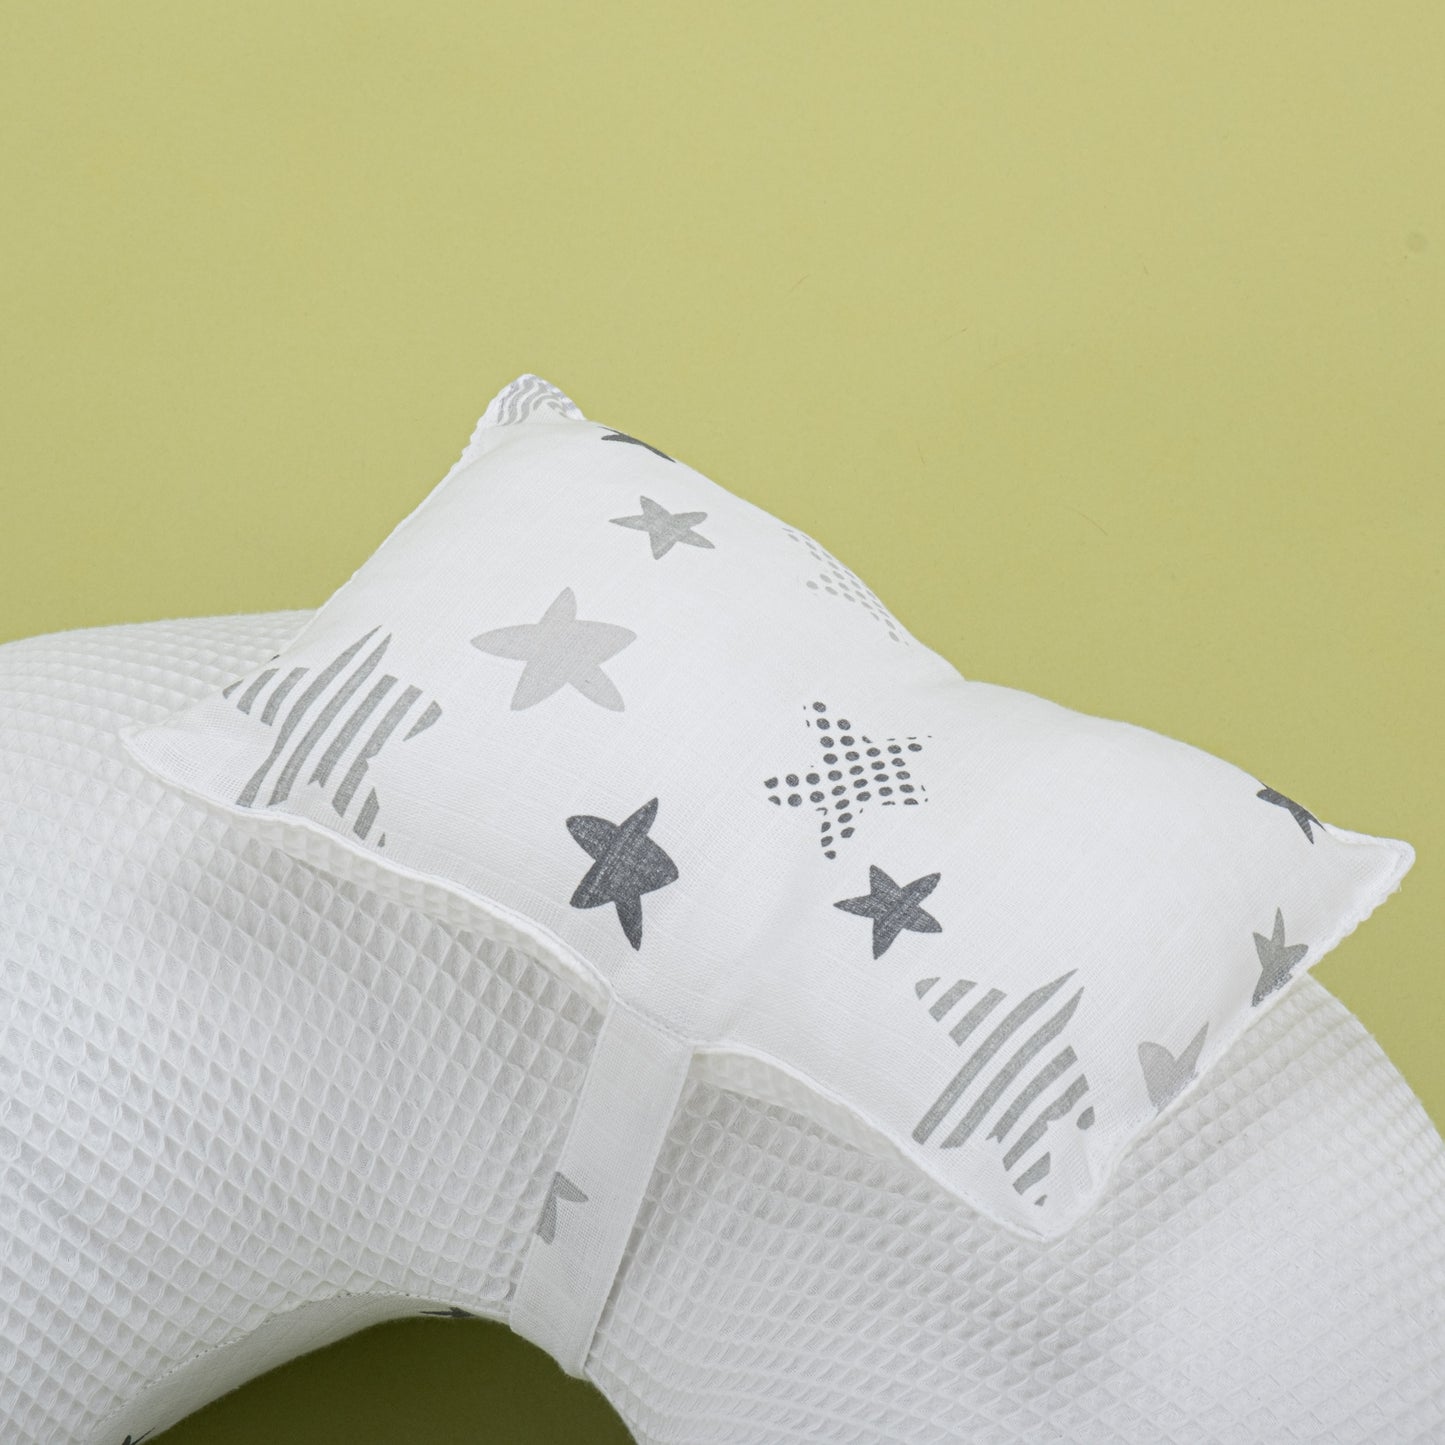 Breastfeeding Pillow - White Honeycomb - Gray Star